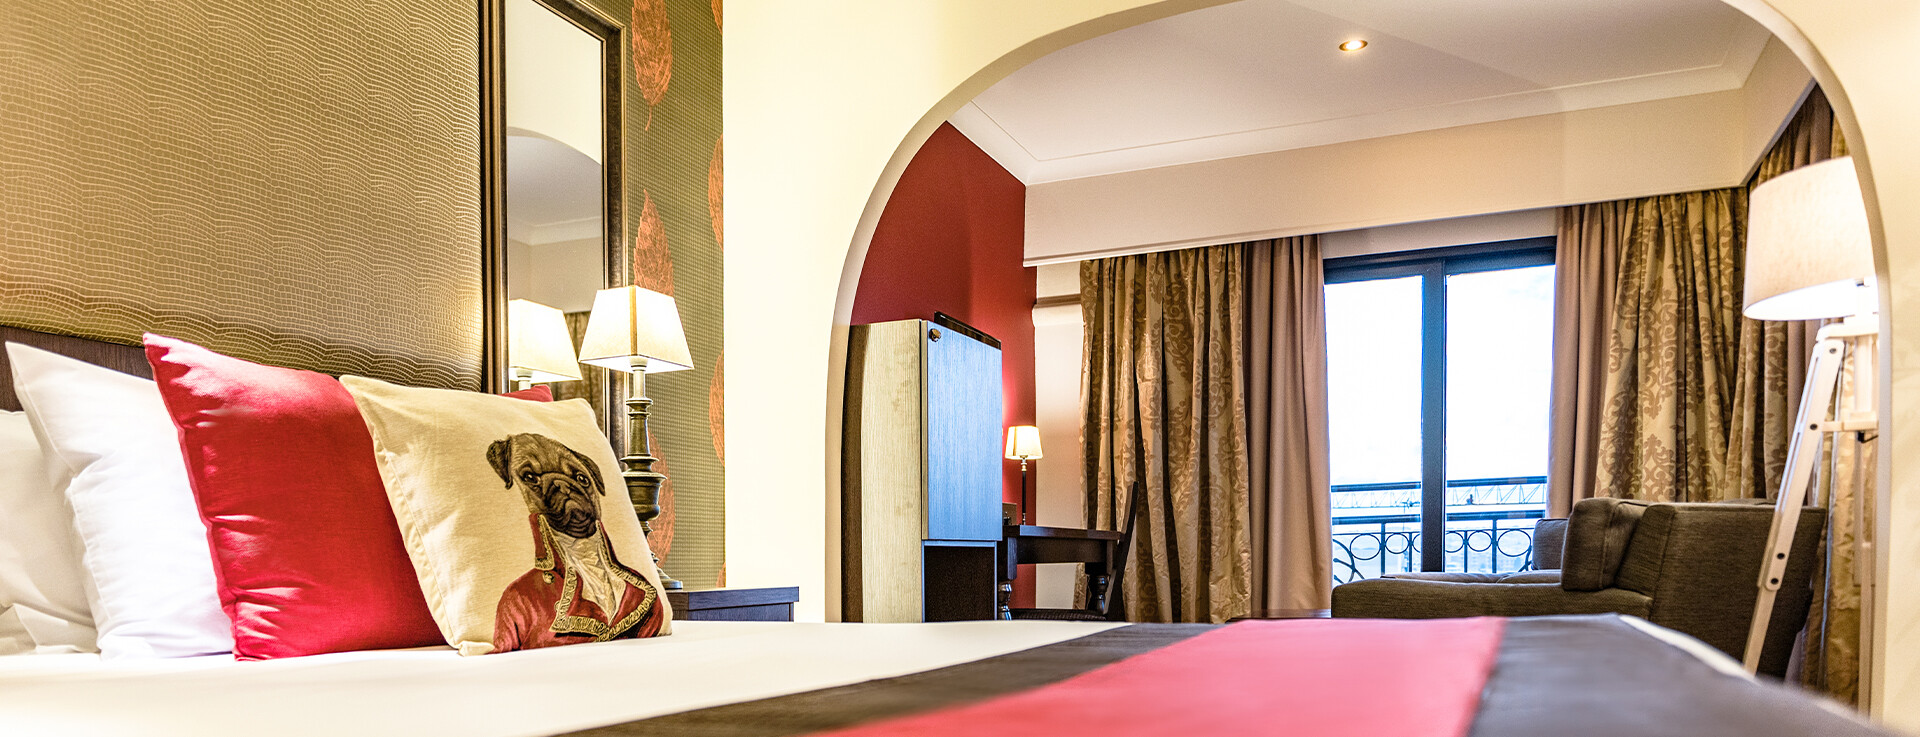 4-star AX The Victoria Hotel in Malta - Accommodation Gift Vouchers